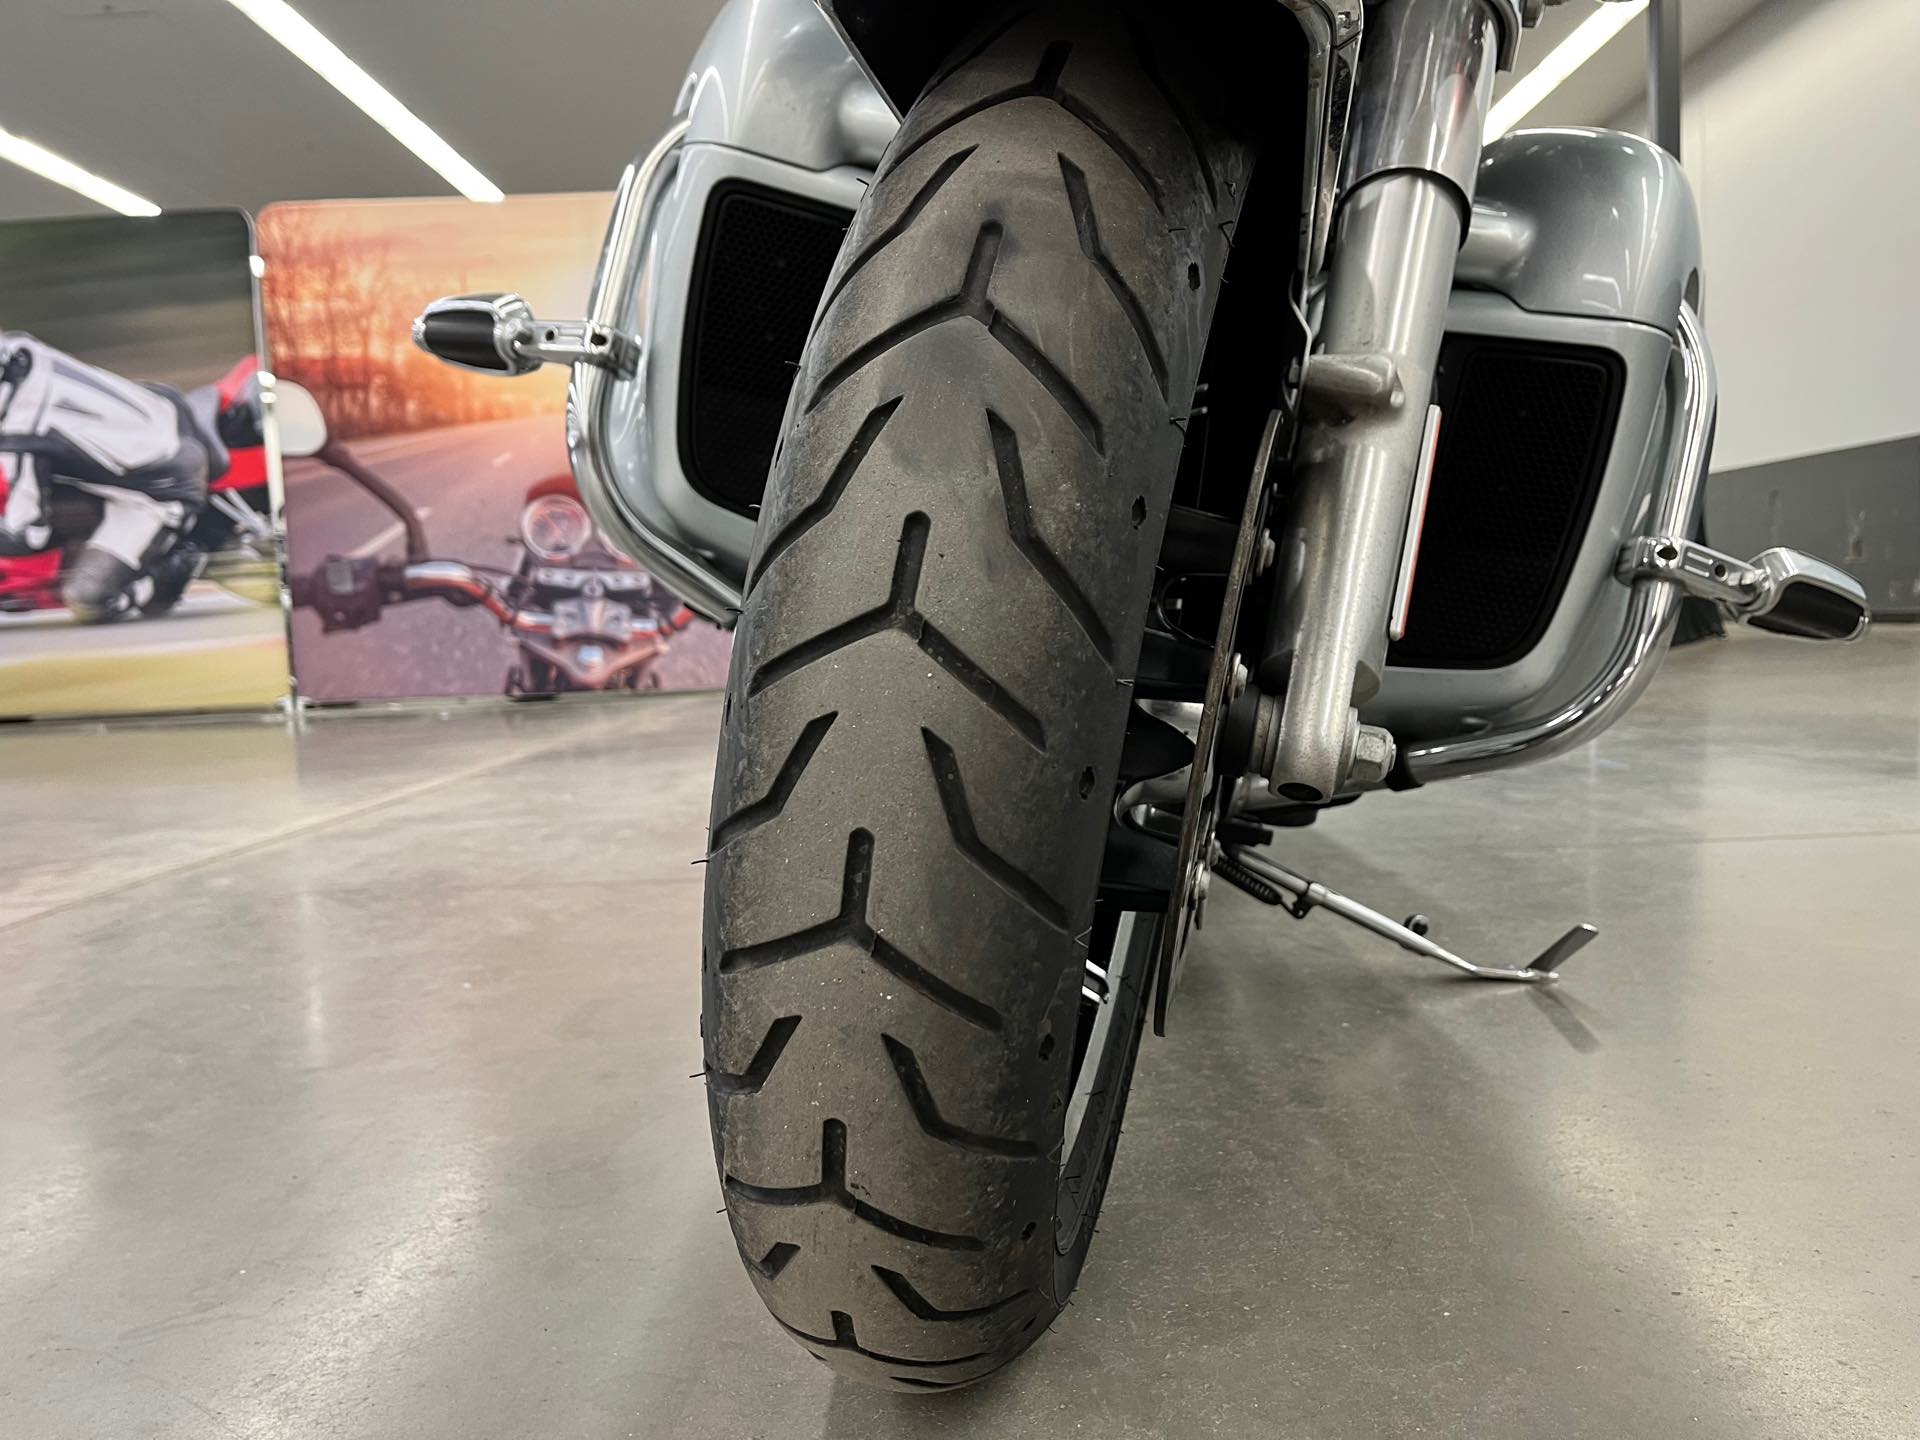 2014 Harley-Davidson Electra Glide Ultra Limited at Aces Motorcycles - Denver